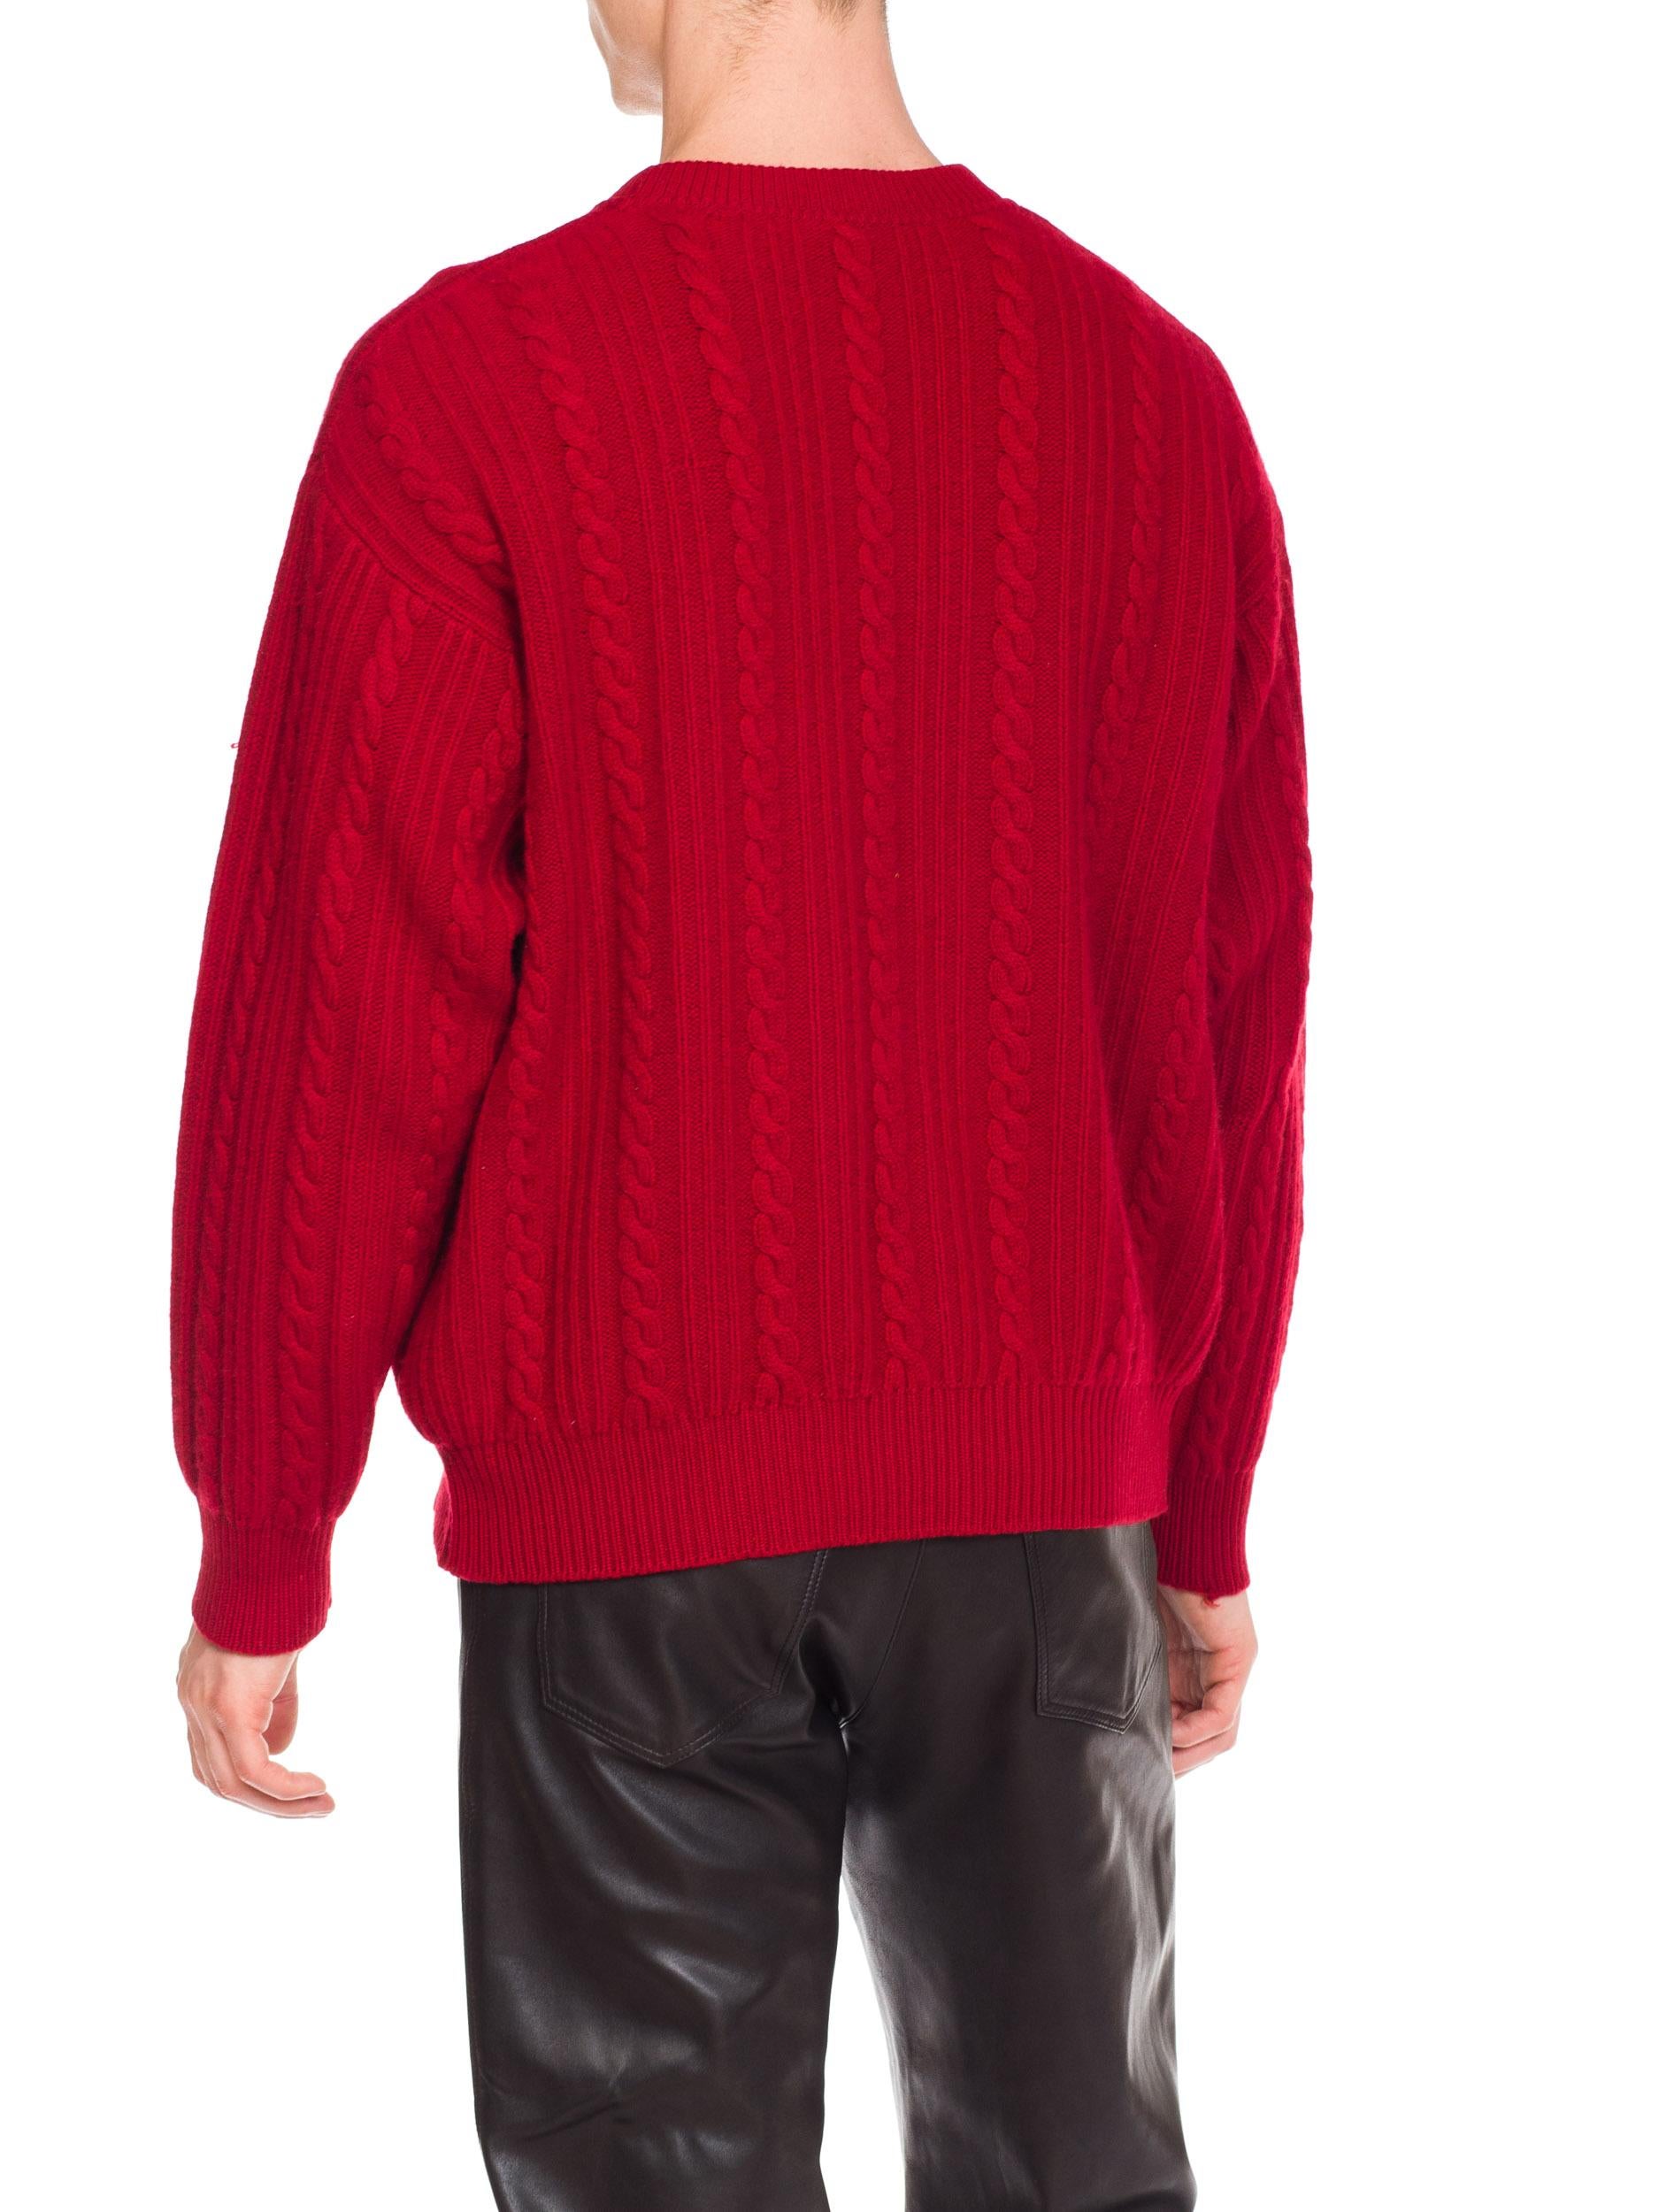 1980s Gucci Men's Cashmere Sweater 1